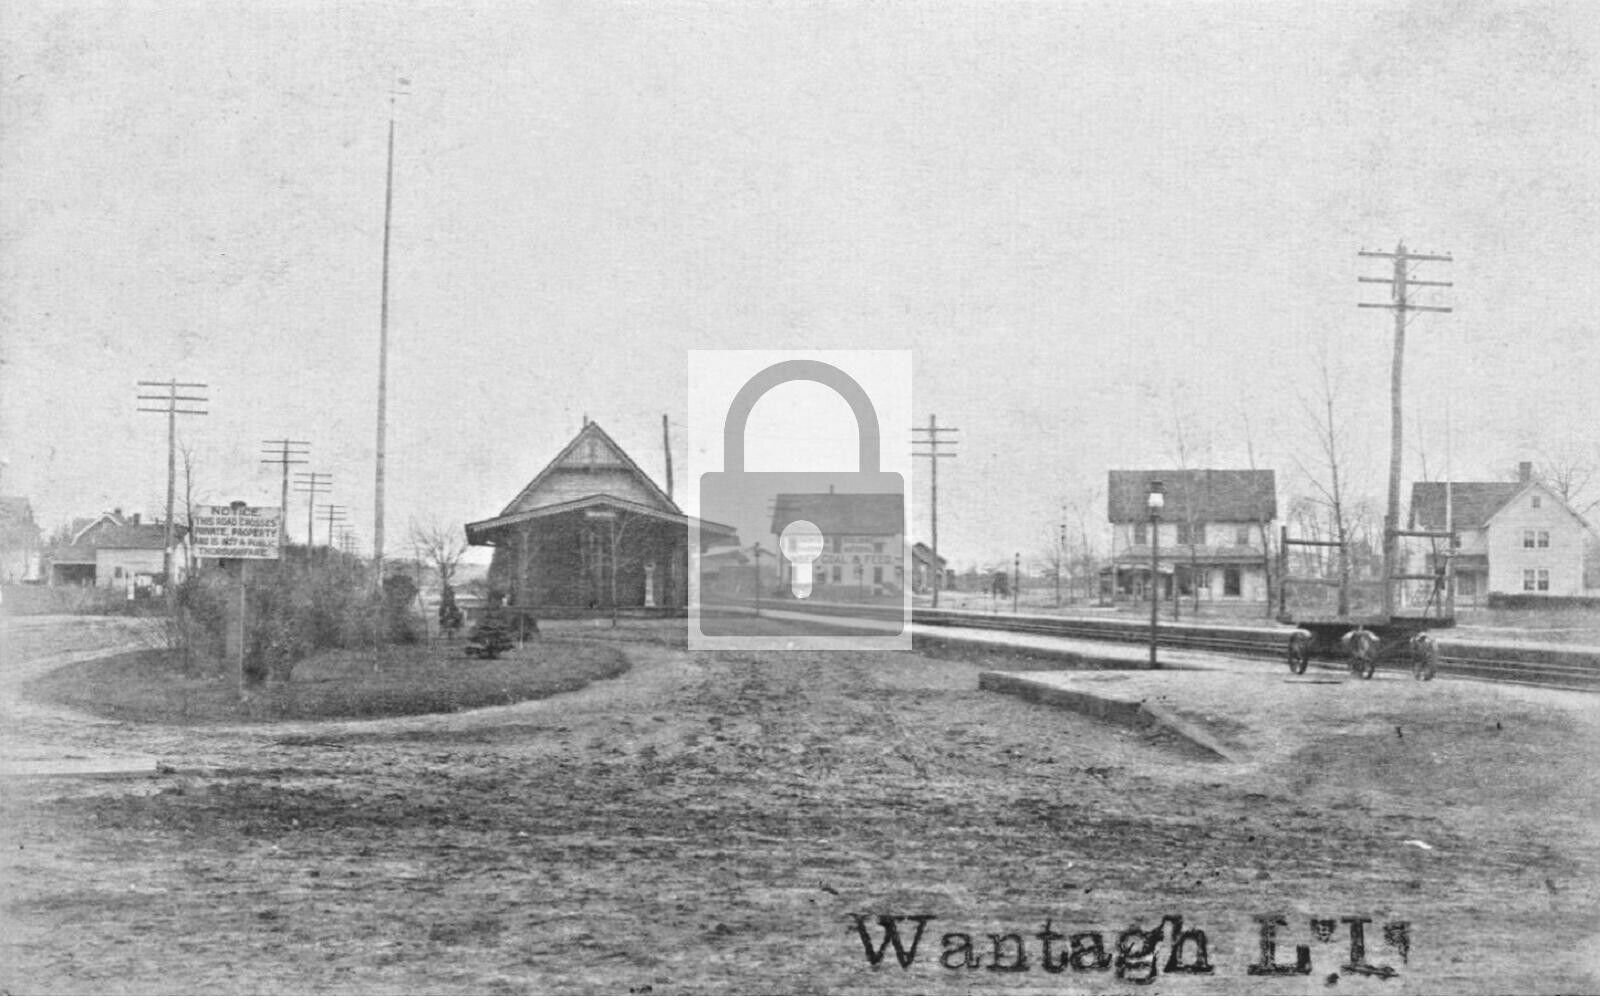 Railroad Train Station Depot Wantagh Long Island LI New York NY Reprint Postcard